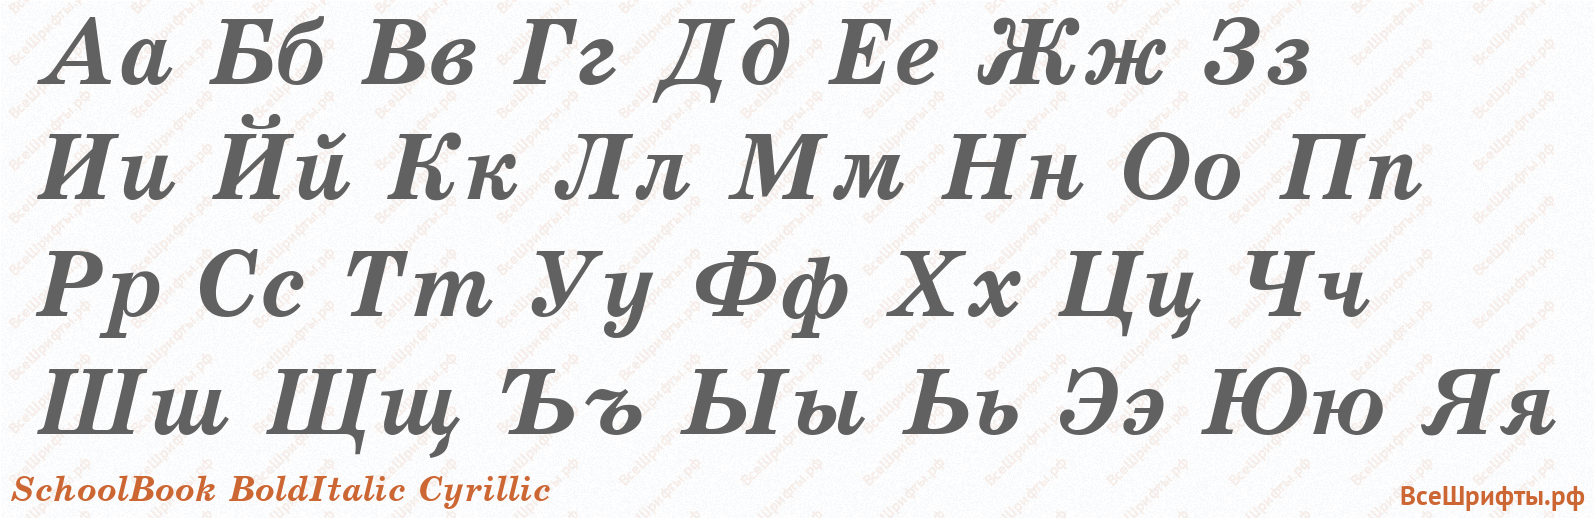 Шрифт SchoolBook BoldItalic Cyrillic с русскими буквами